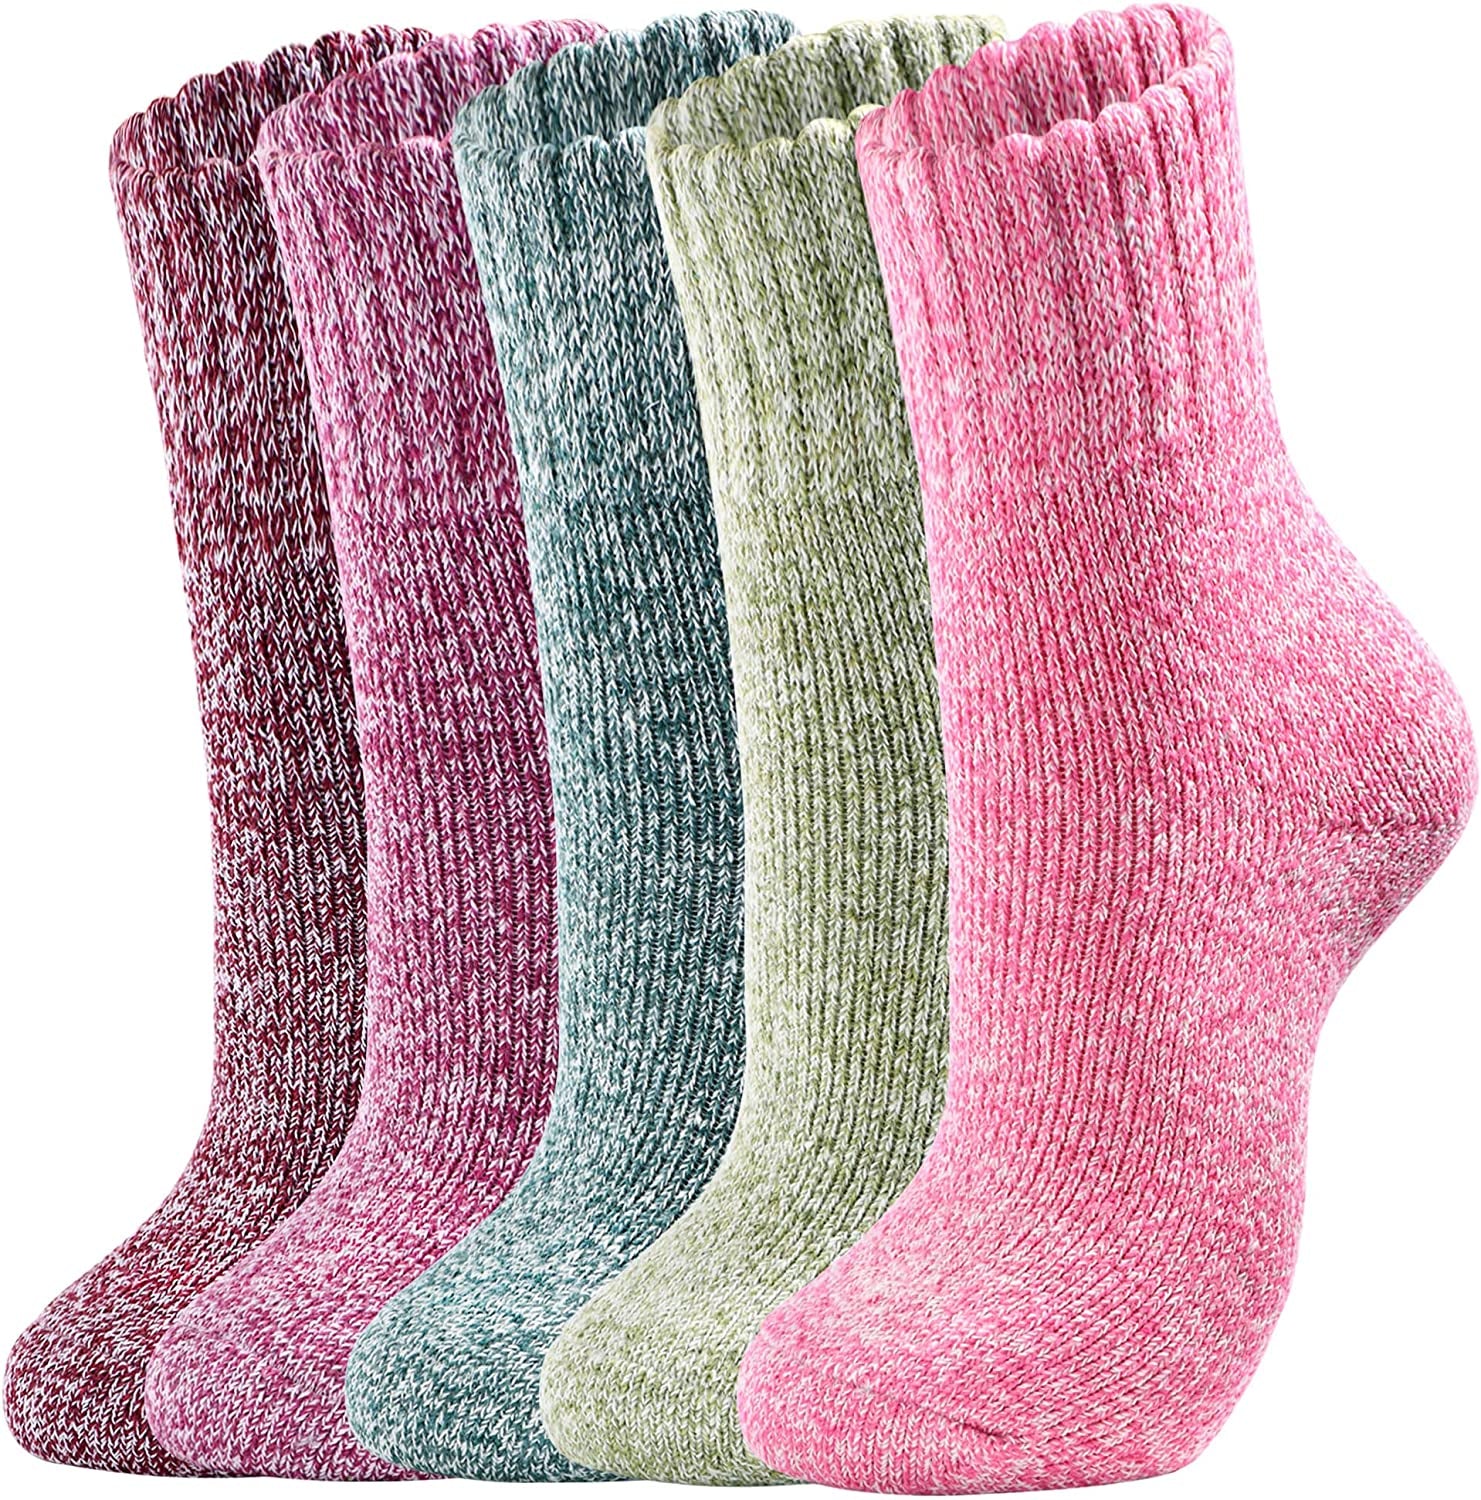 5 Pairs Wool Socks - Wool Socks for Women & Men Boot Socks Soft Crew Socks Winter Hiking Socks Thick Cozy Socks Warm Long Socks